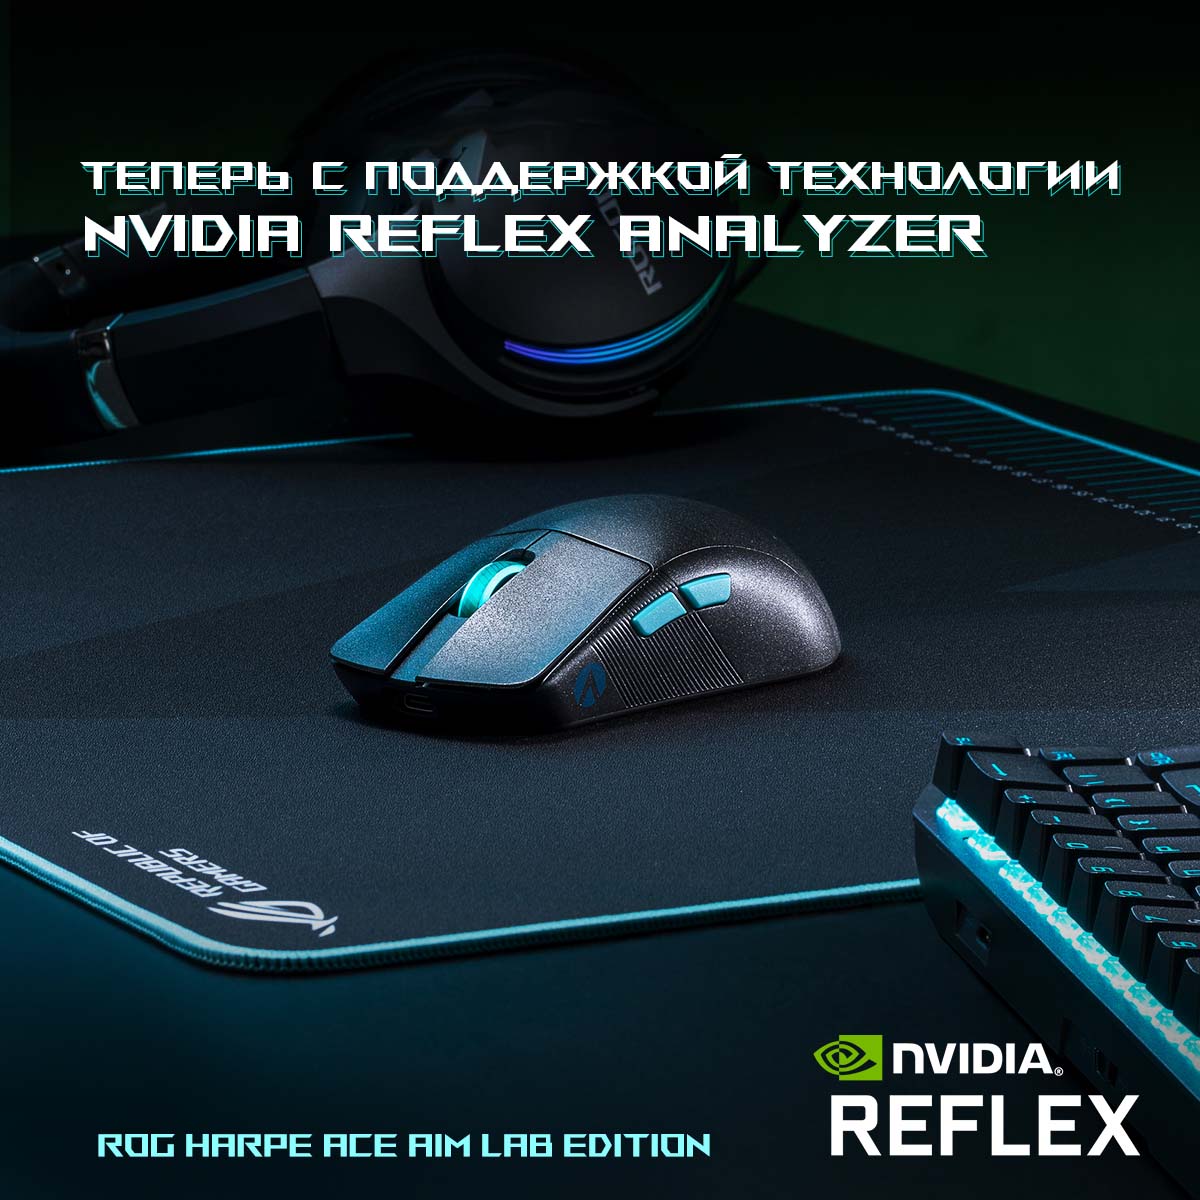 Nvidia reflex dota 2 включать или нет фото 114